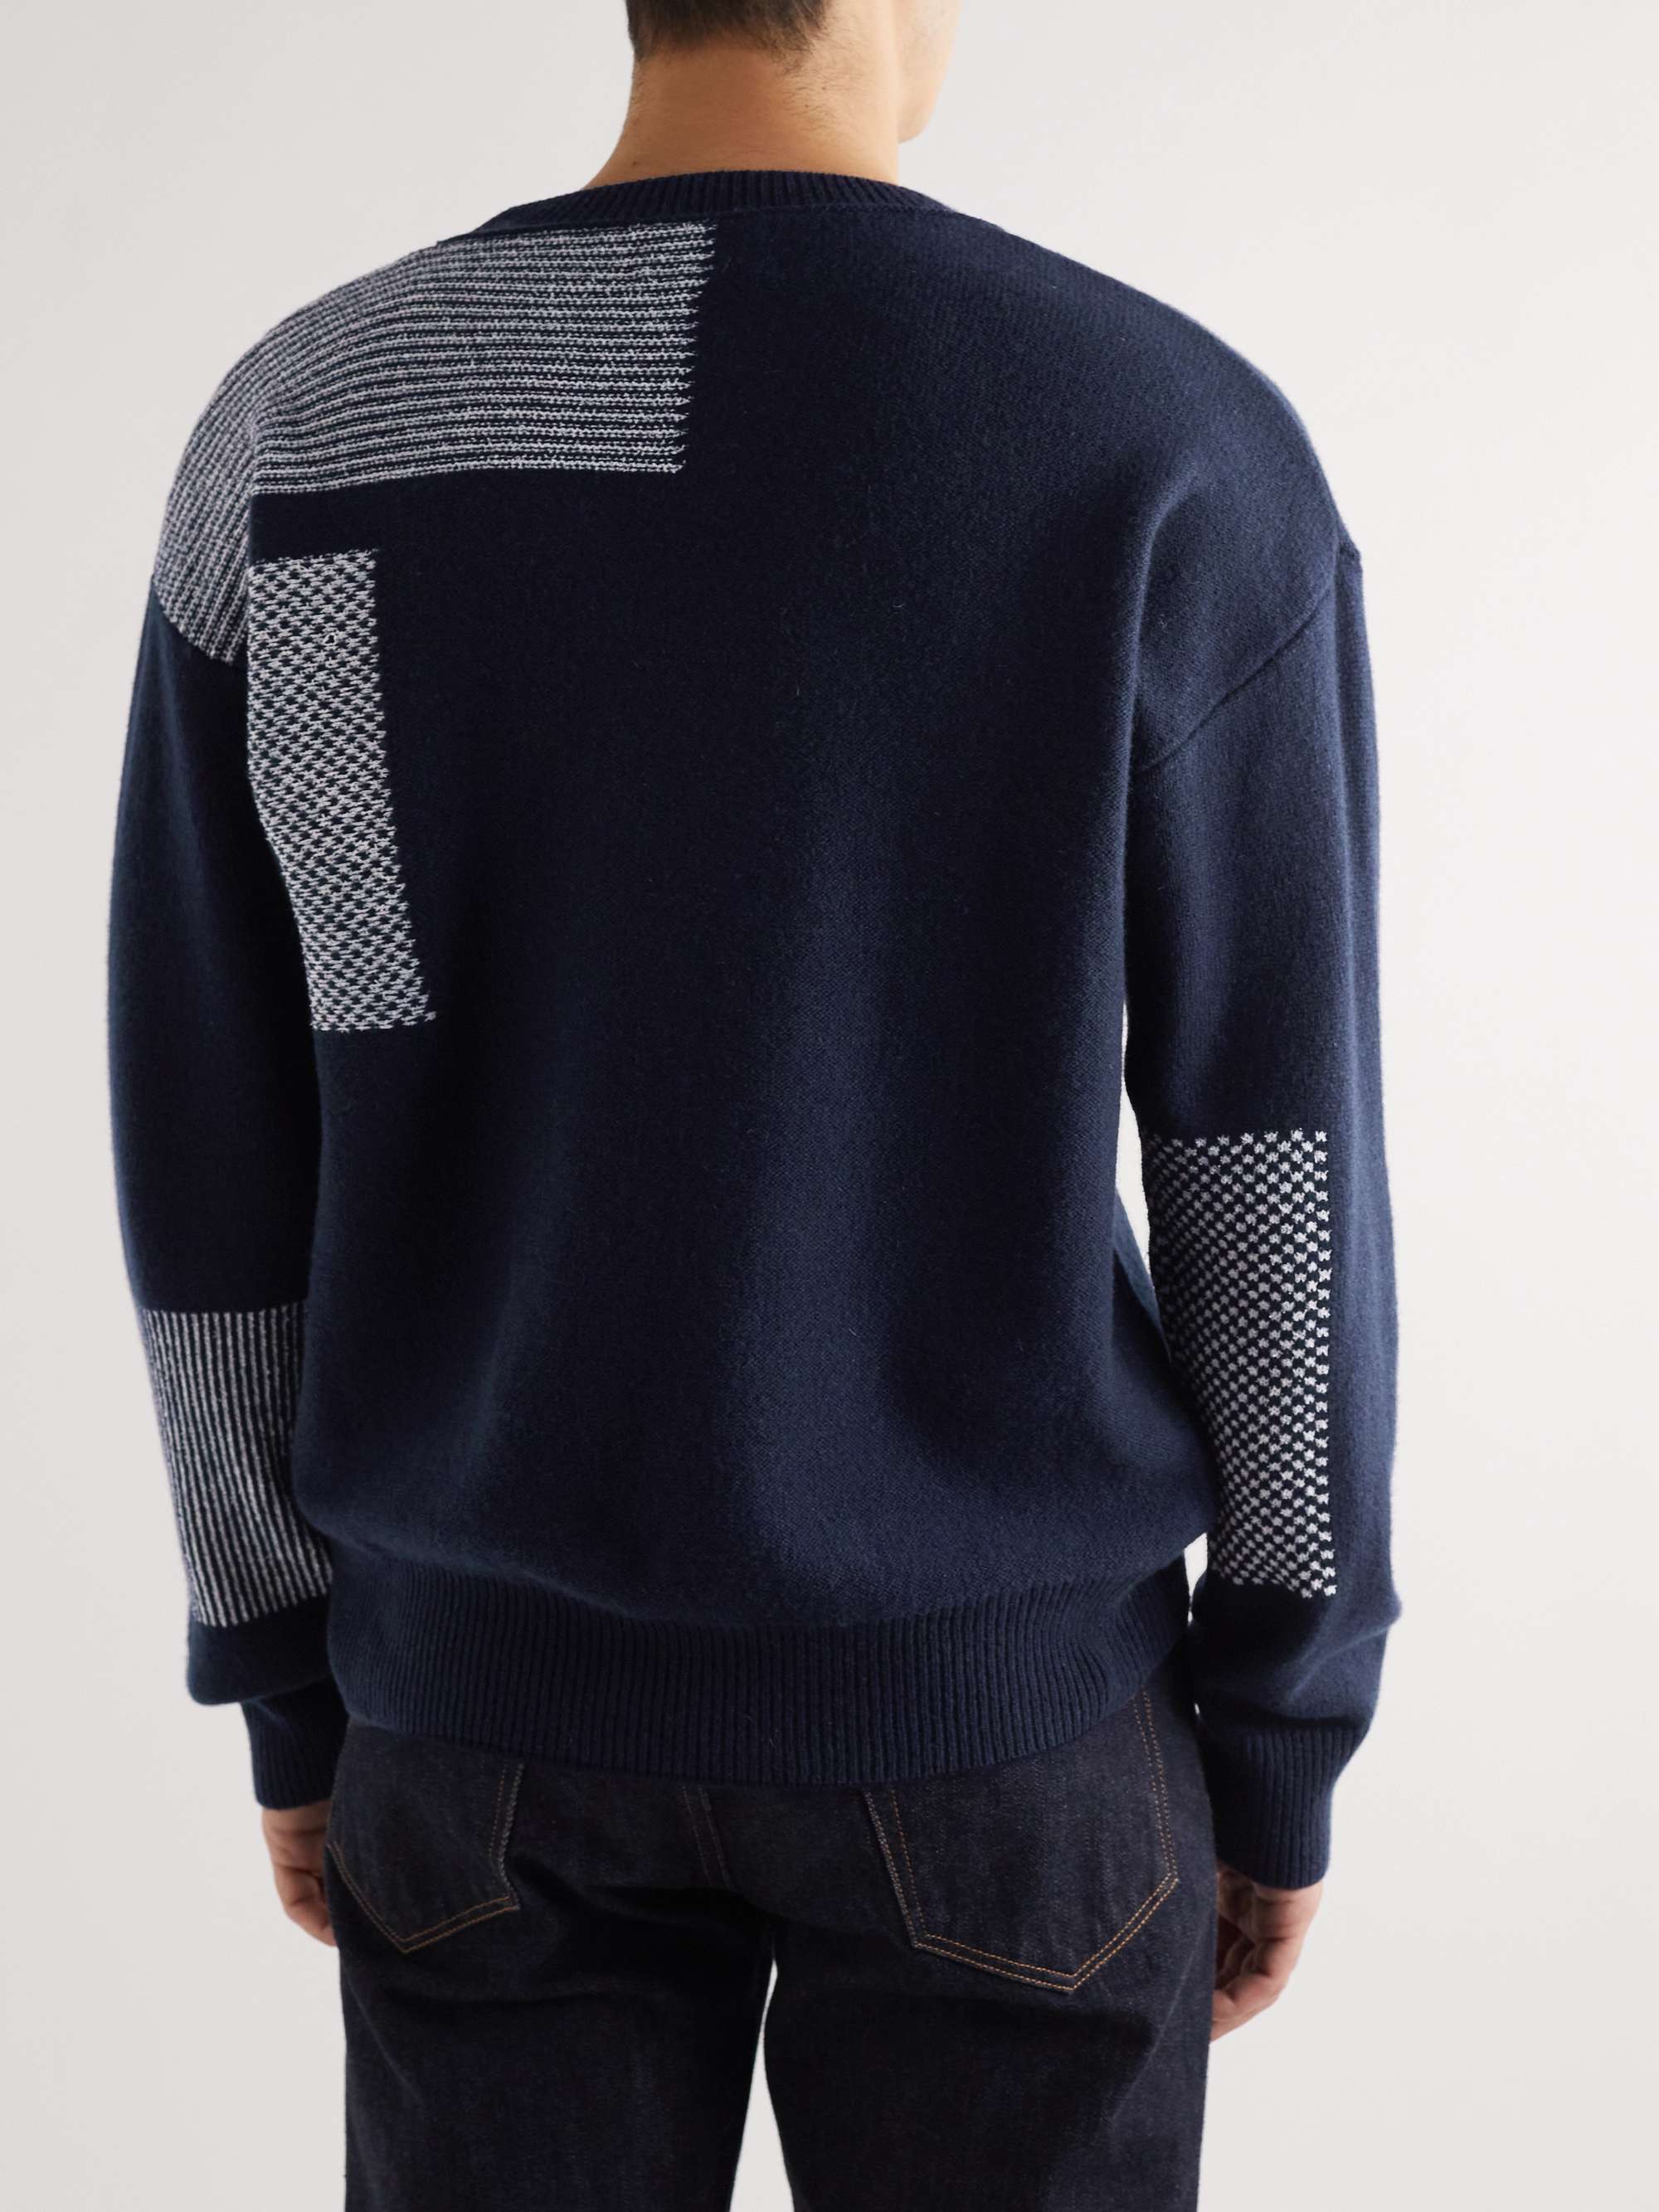 MR P. Jacquard-Knit Cashmere-Blend Sweater